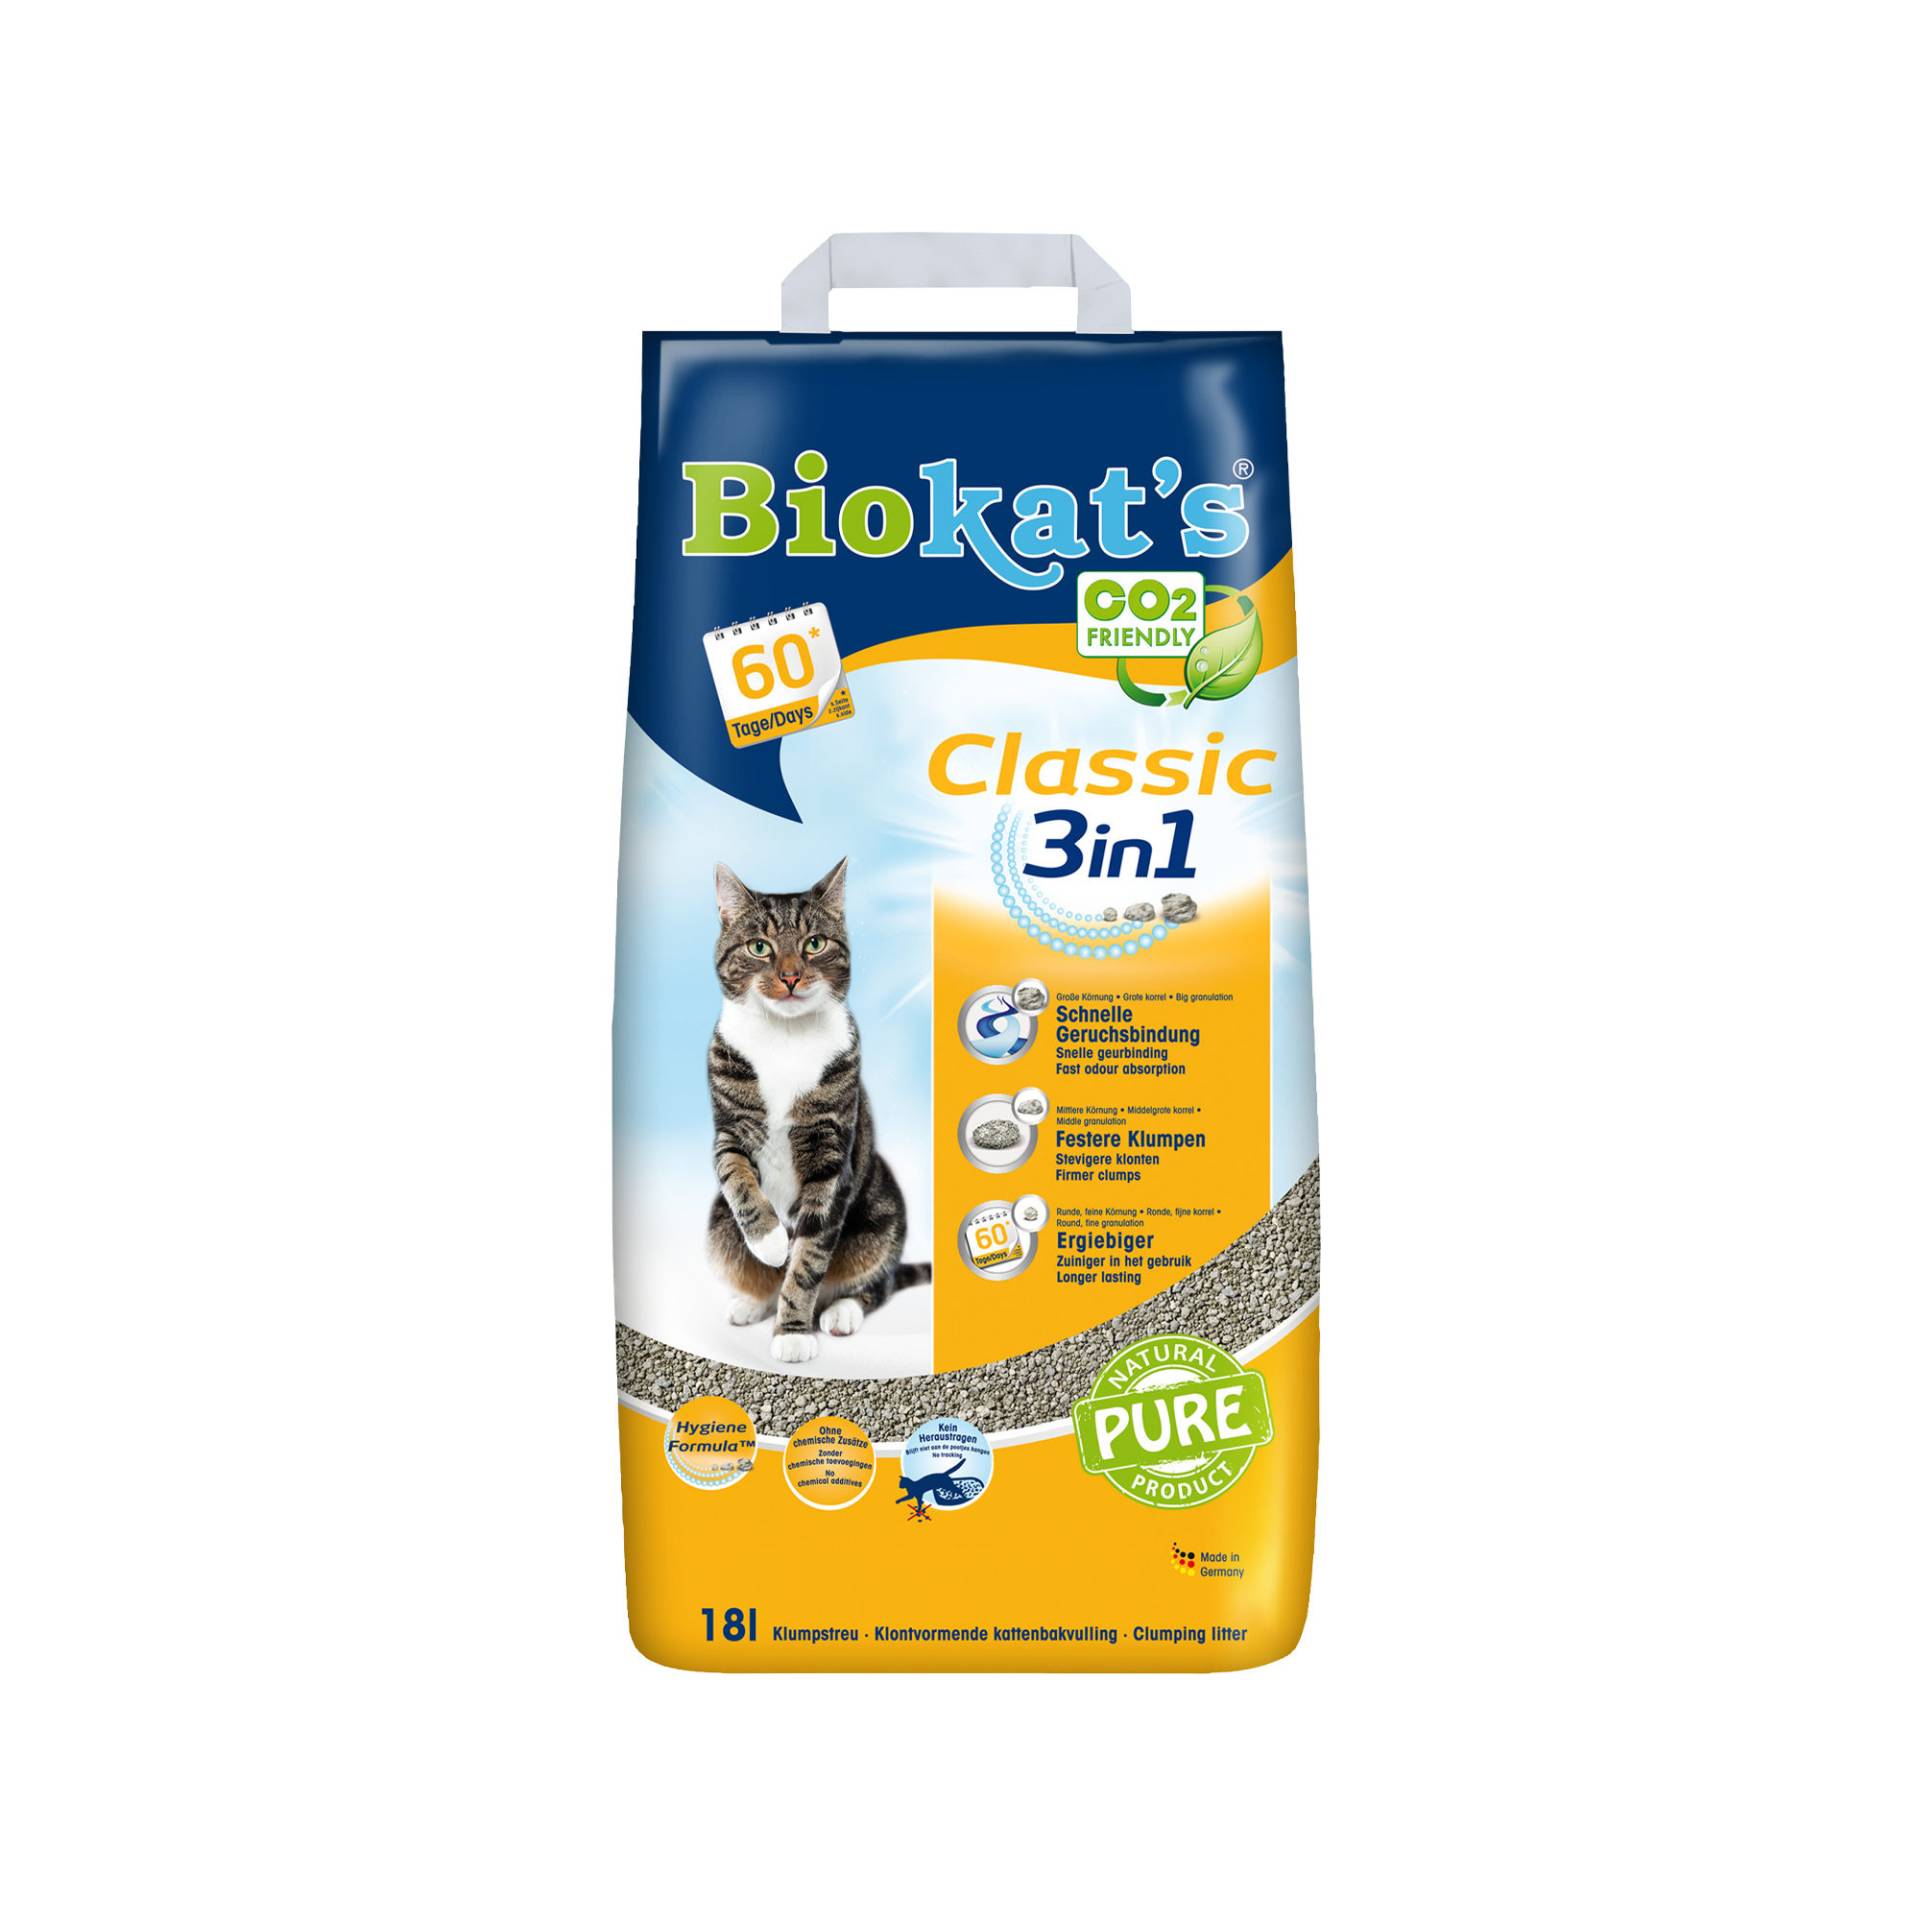 Biokat's Classic 3in2 - 18 Liter von Biokat